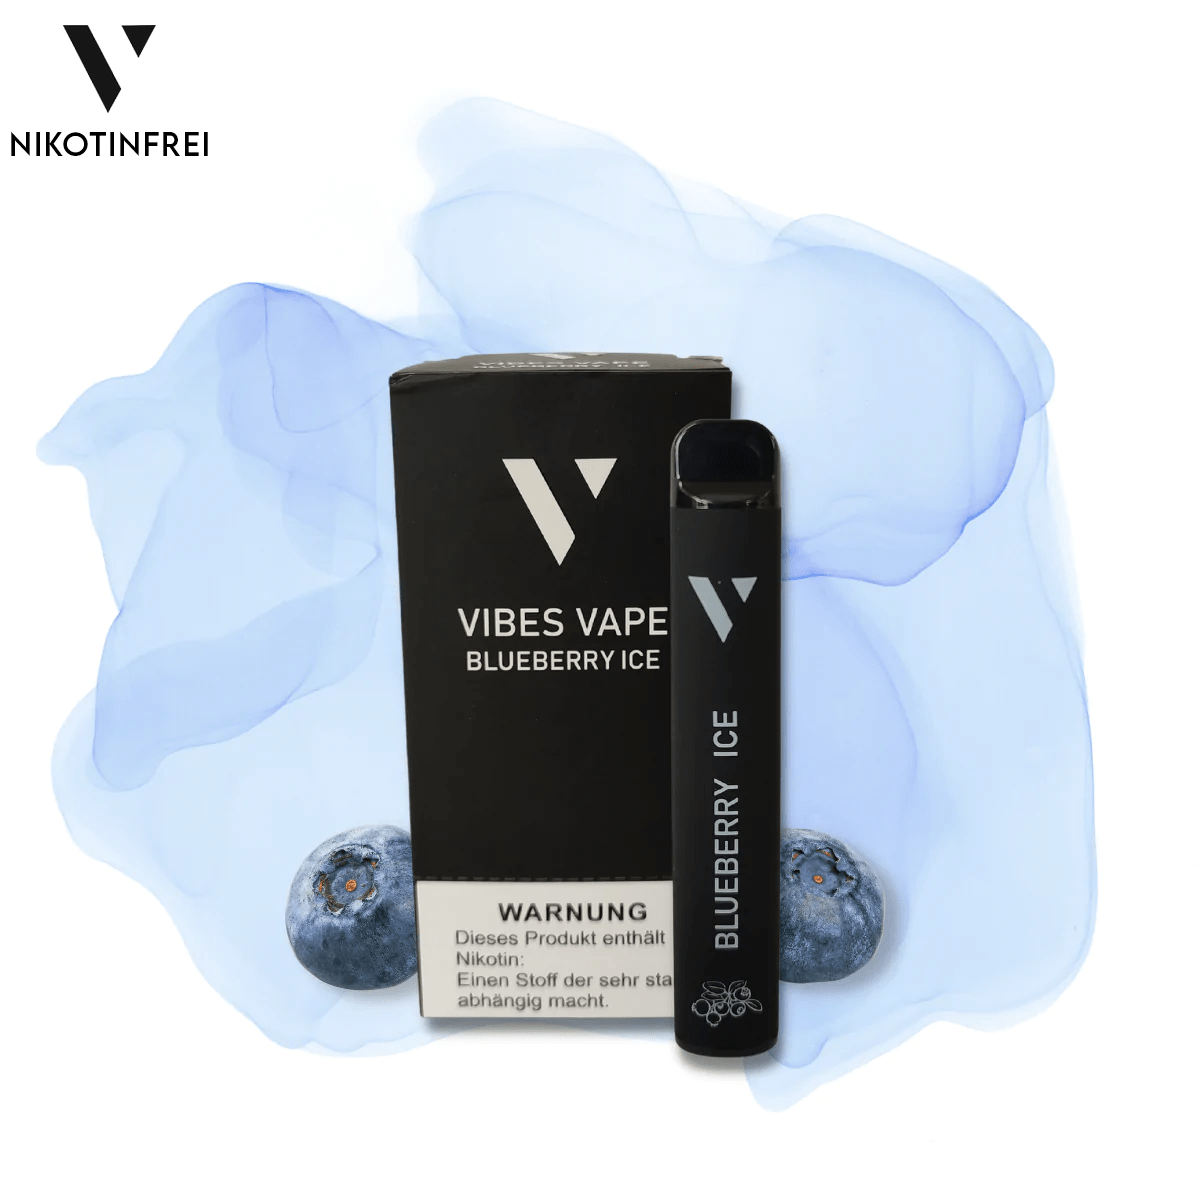 Nikotinfrei - 10x Vibes Vape - Blueberry ICE - vibesvape.de